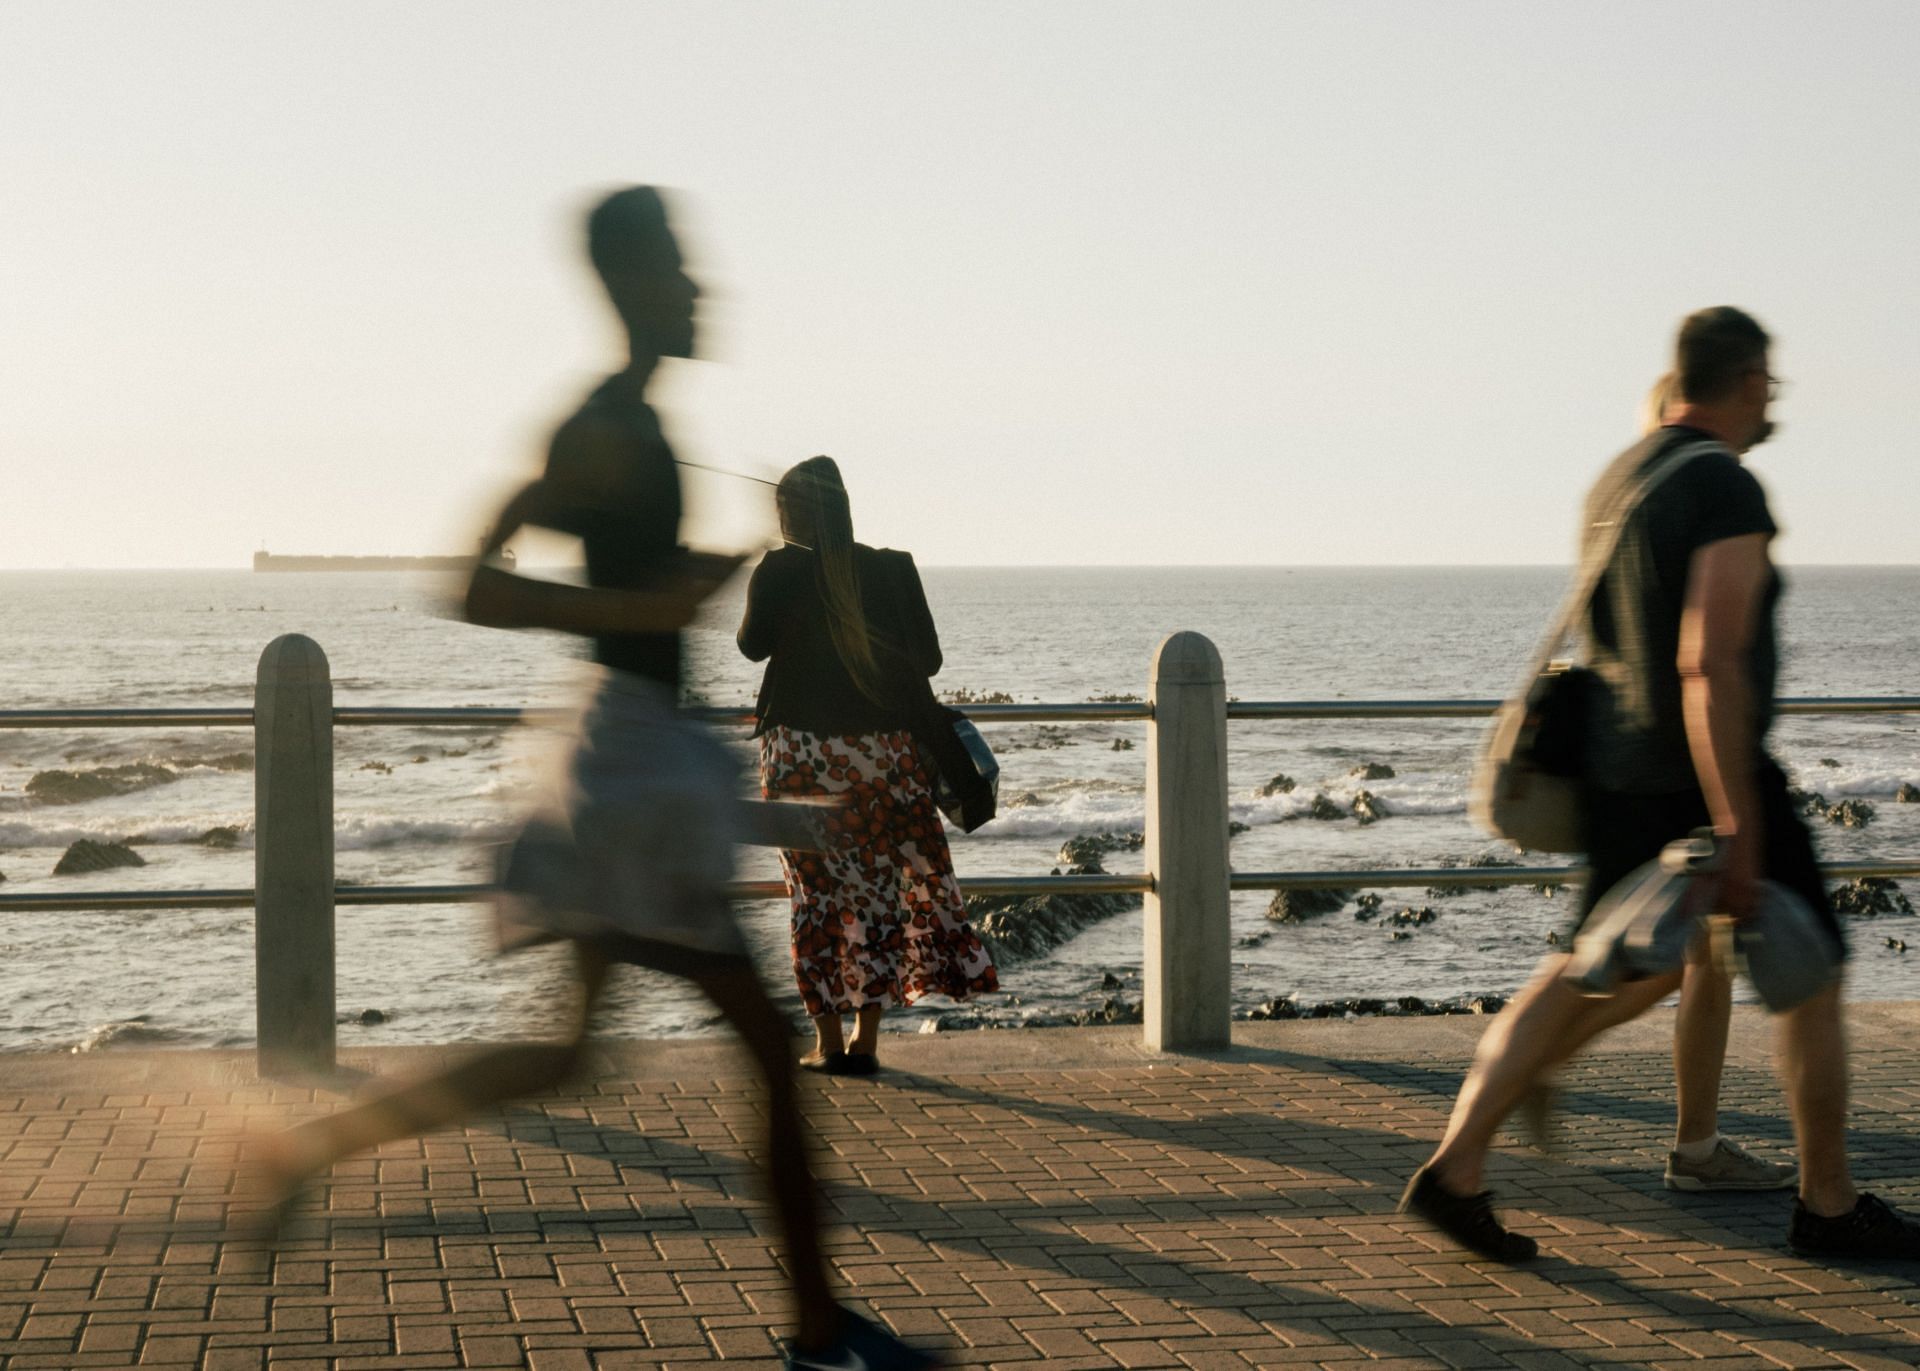 Walking helps balance and keep your weight healthy. (Image via Pexels/Rfstudio)